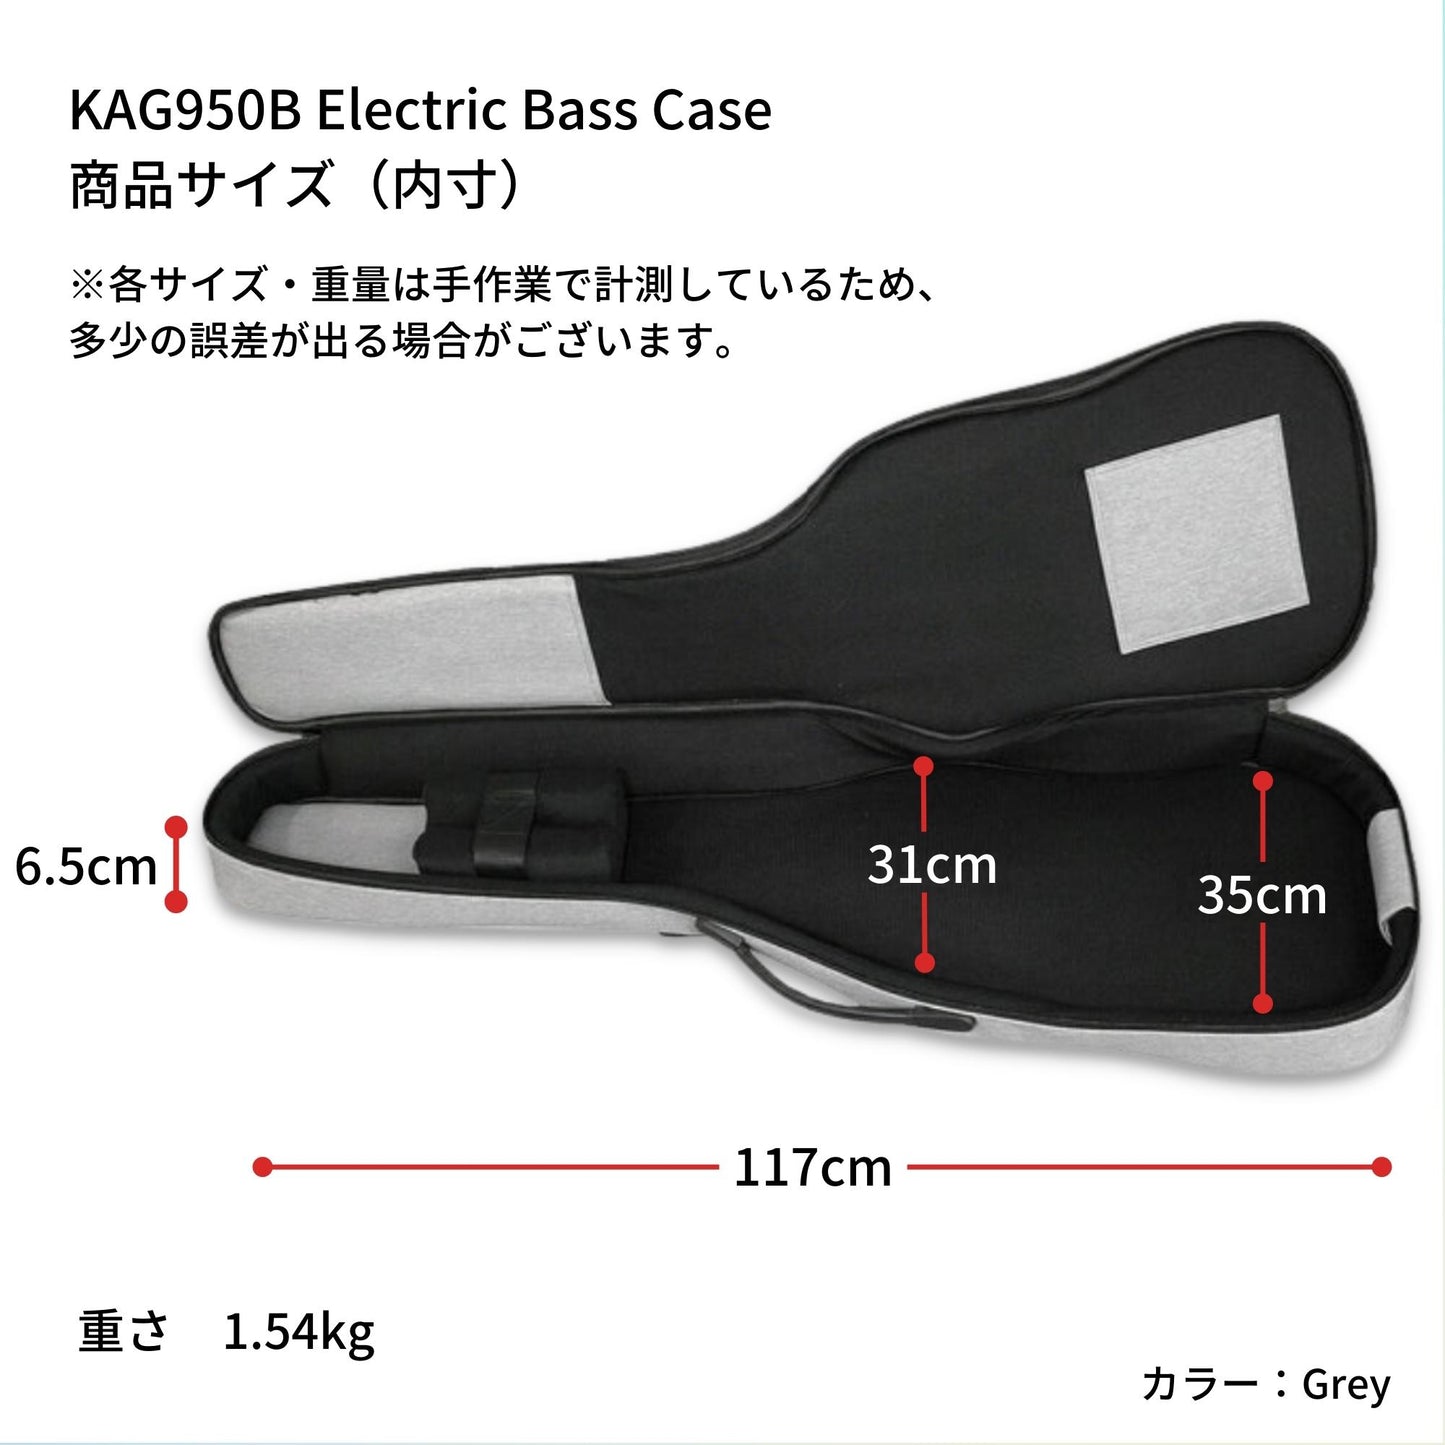 Kavaborg/KAG950B Electric Bass Case